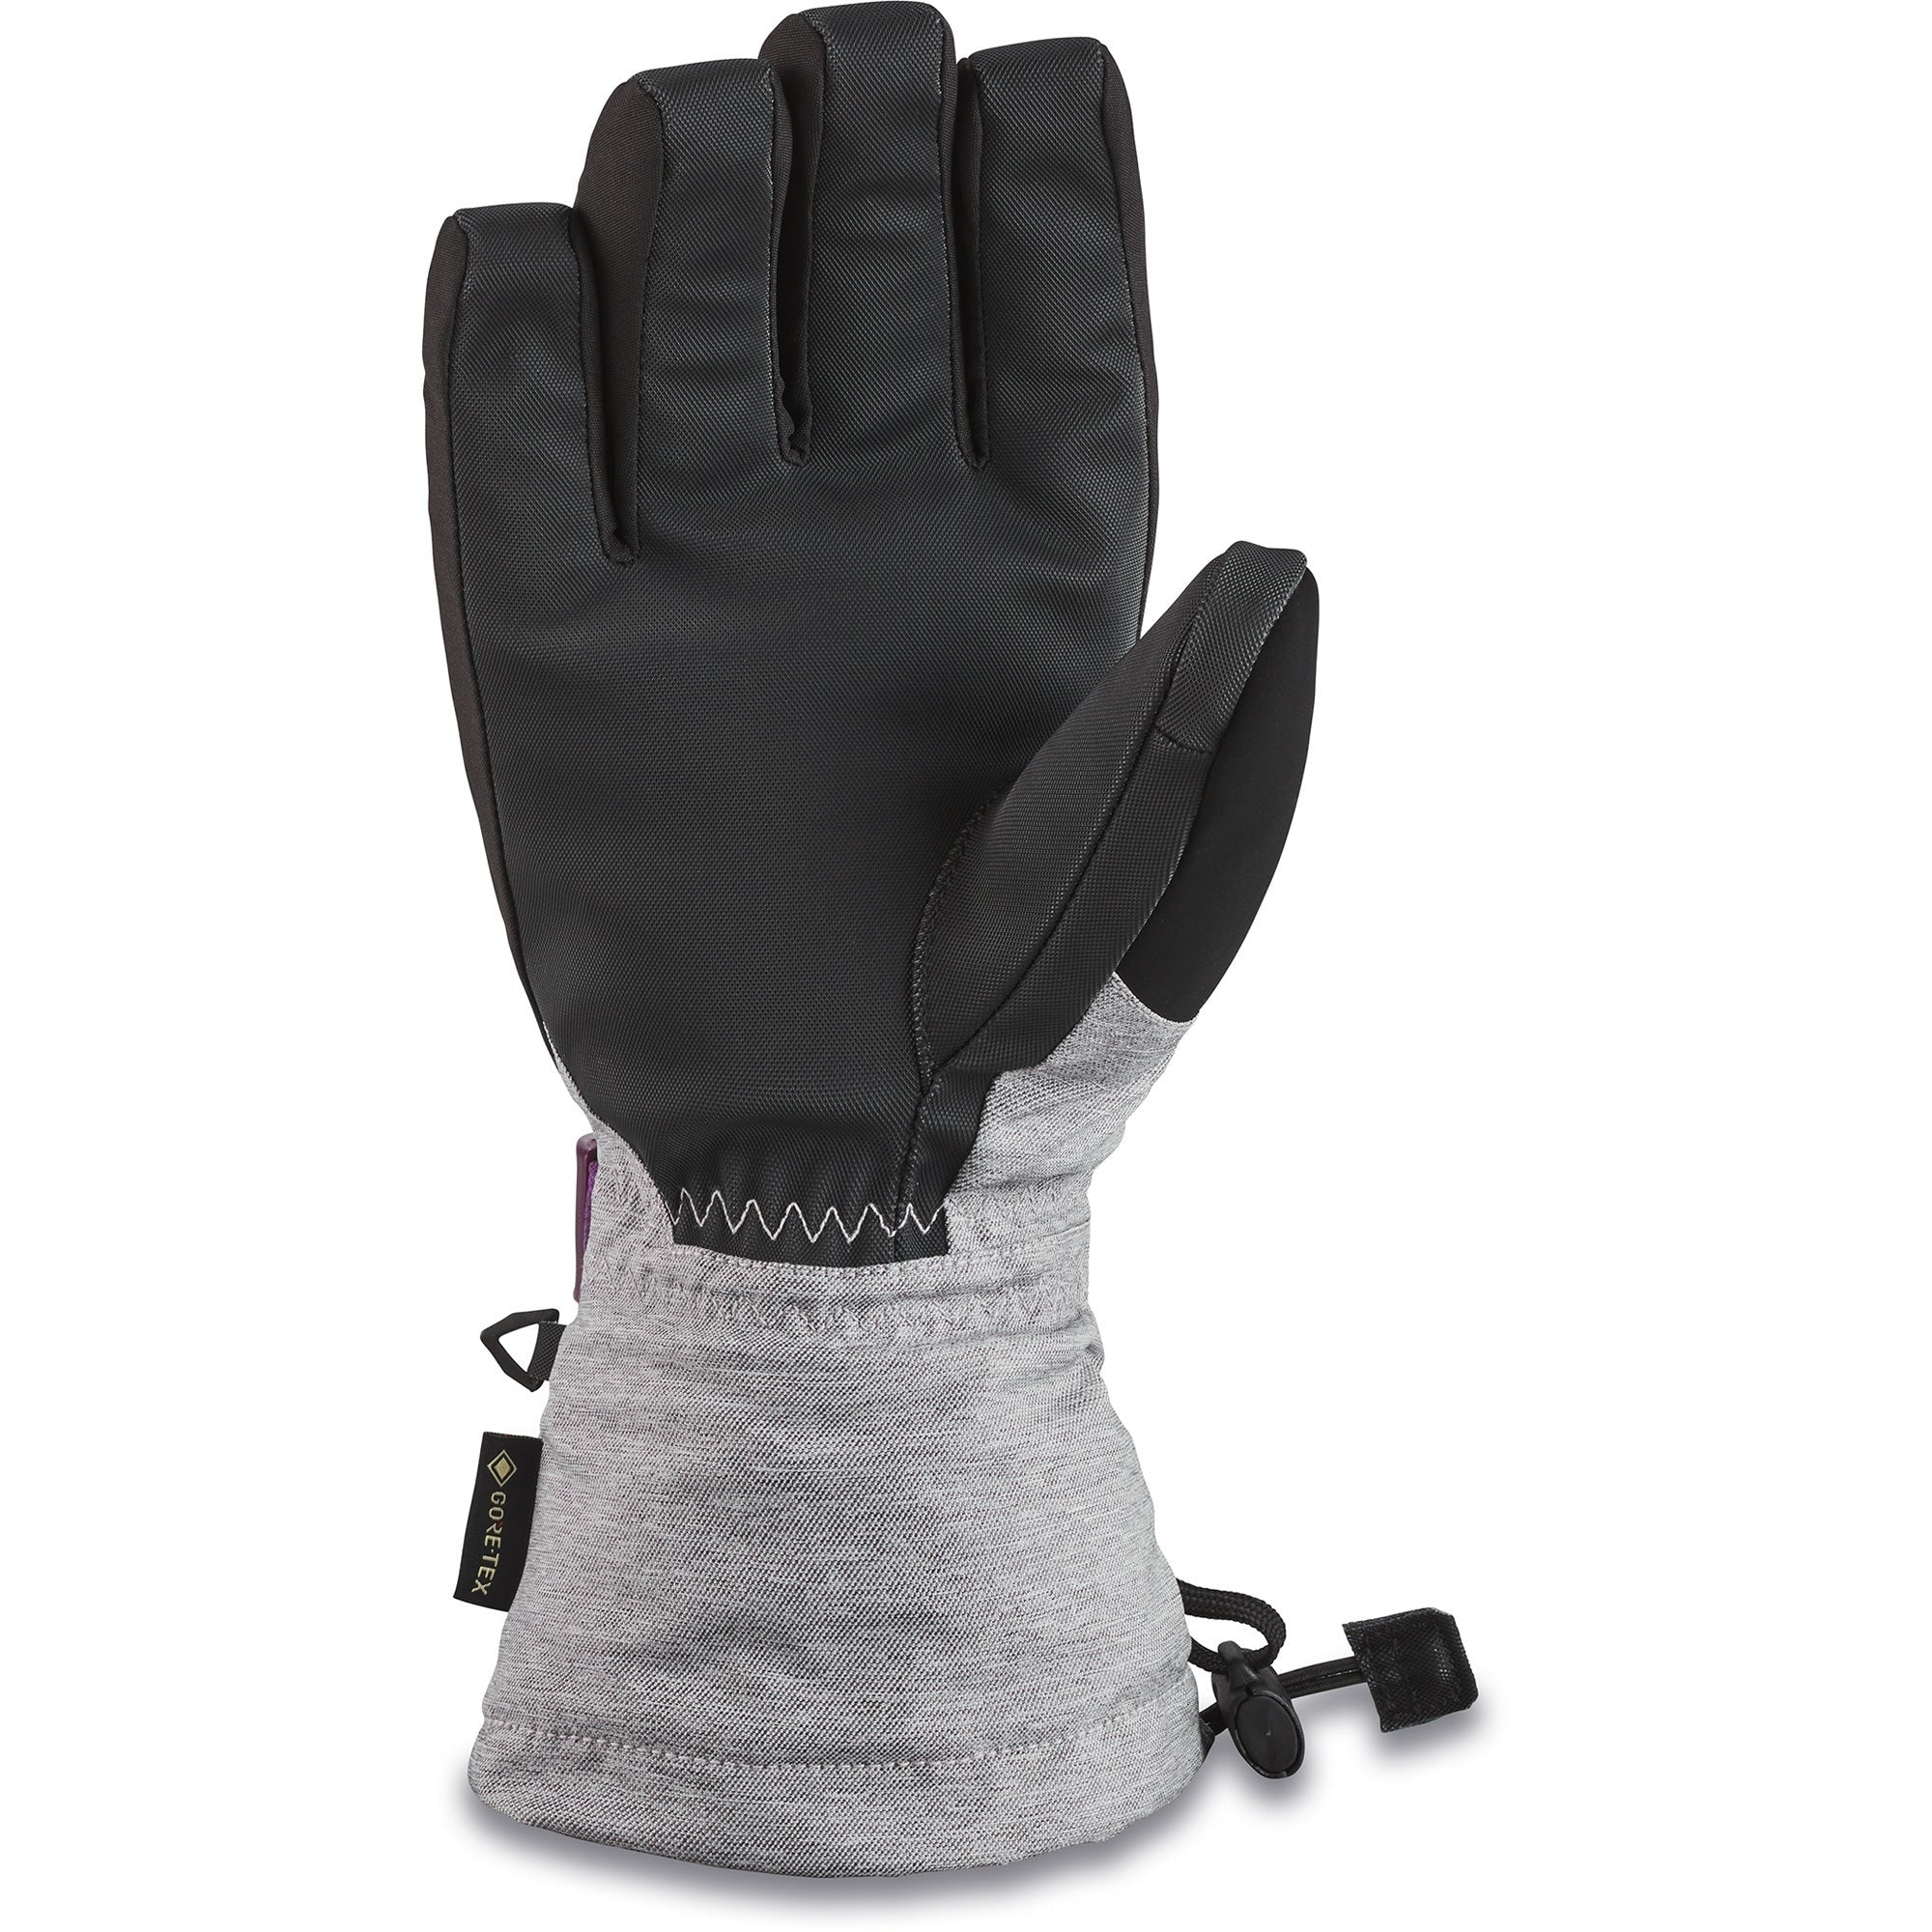 Sequoia Gore-Tex Womens Snow Glove